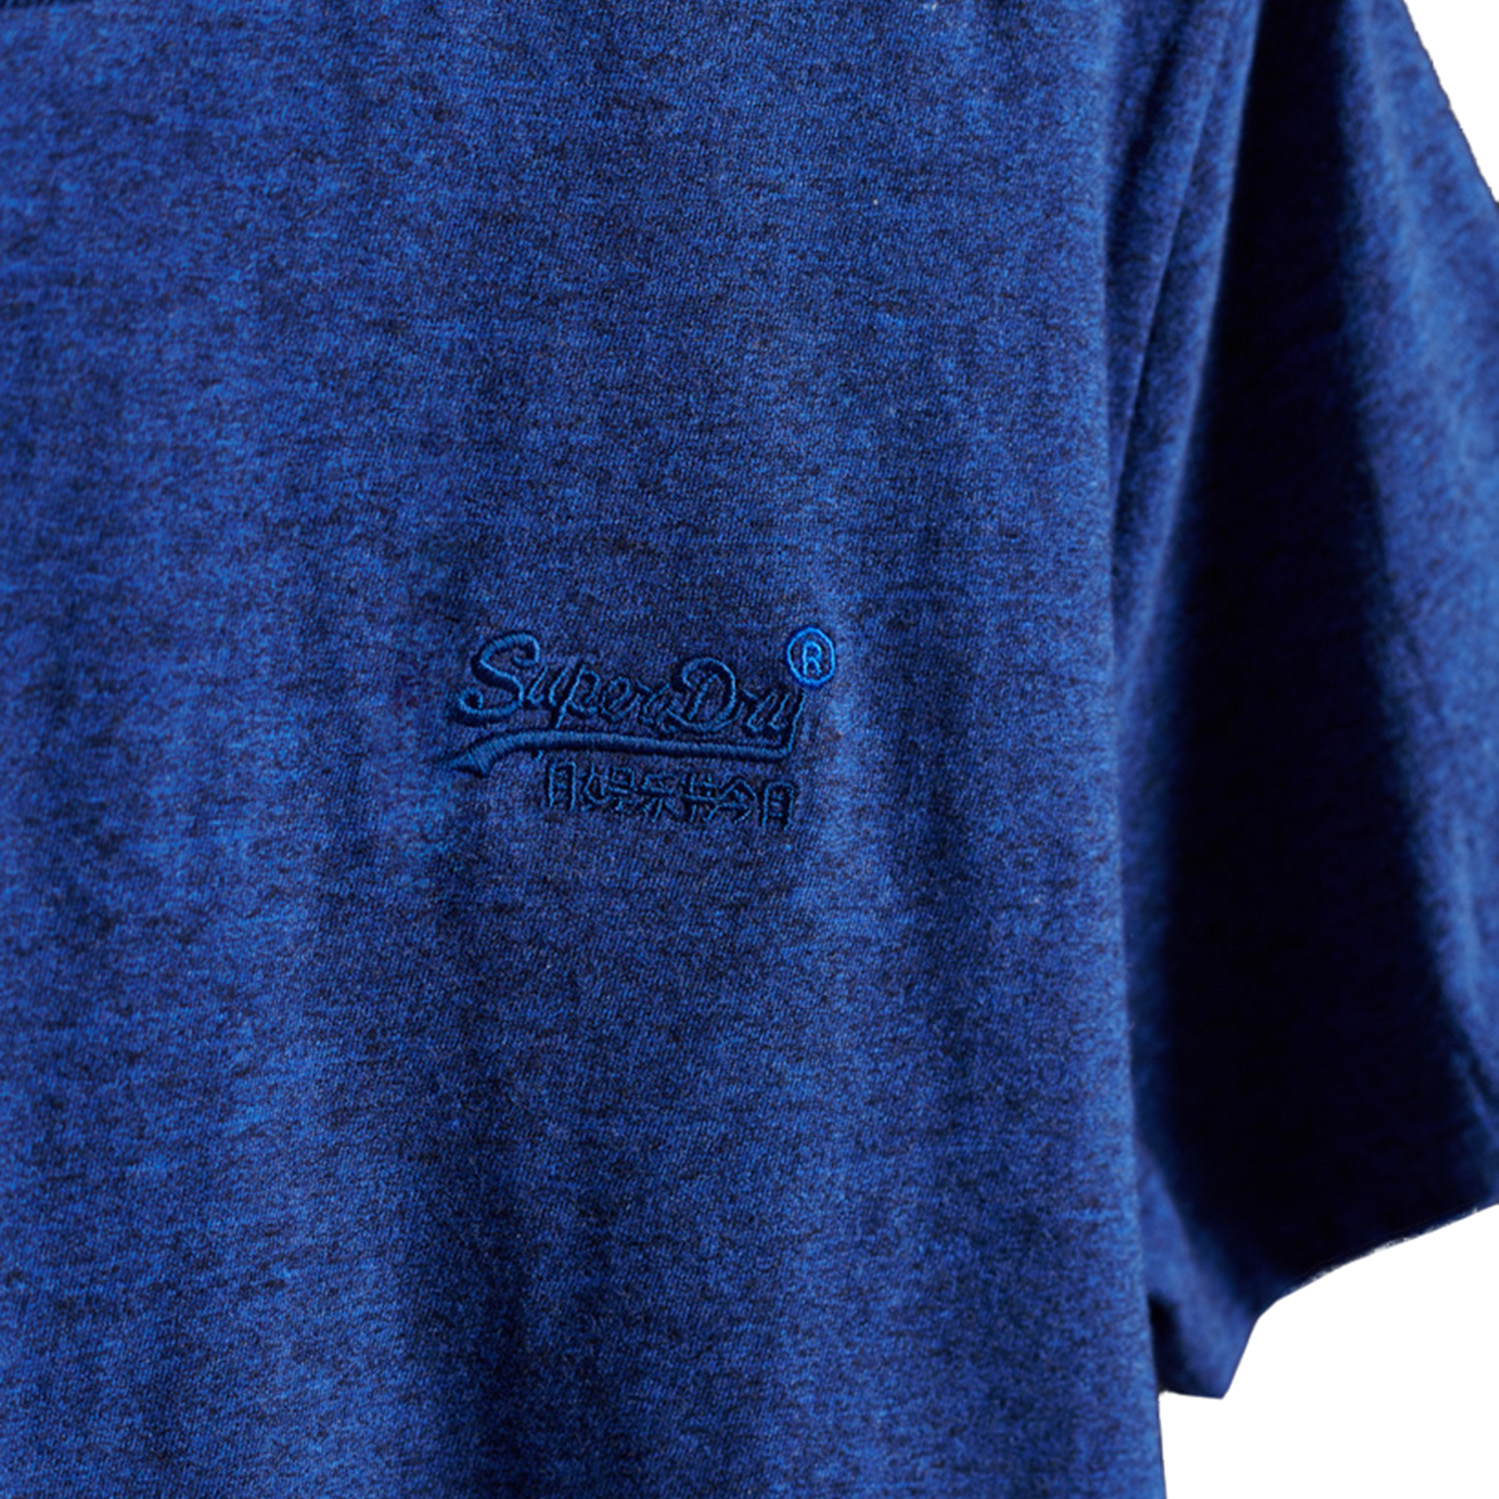 Superdry Herren Orange Label Vintage Embroidery Tee T-Shirt M10000119A blau